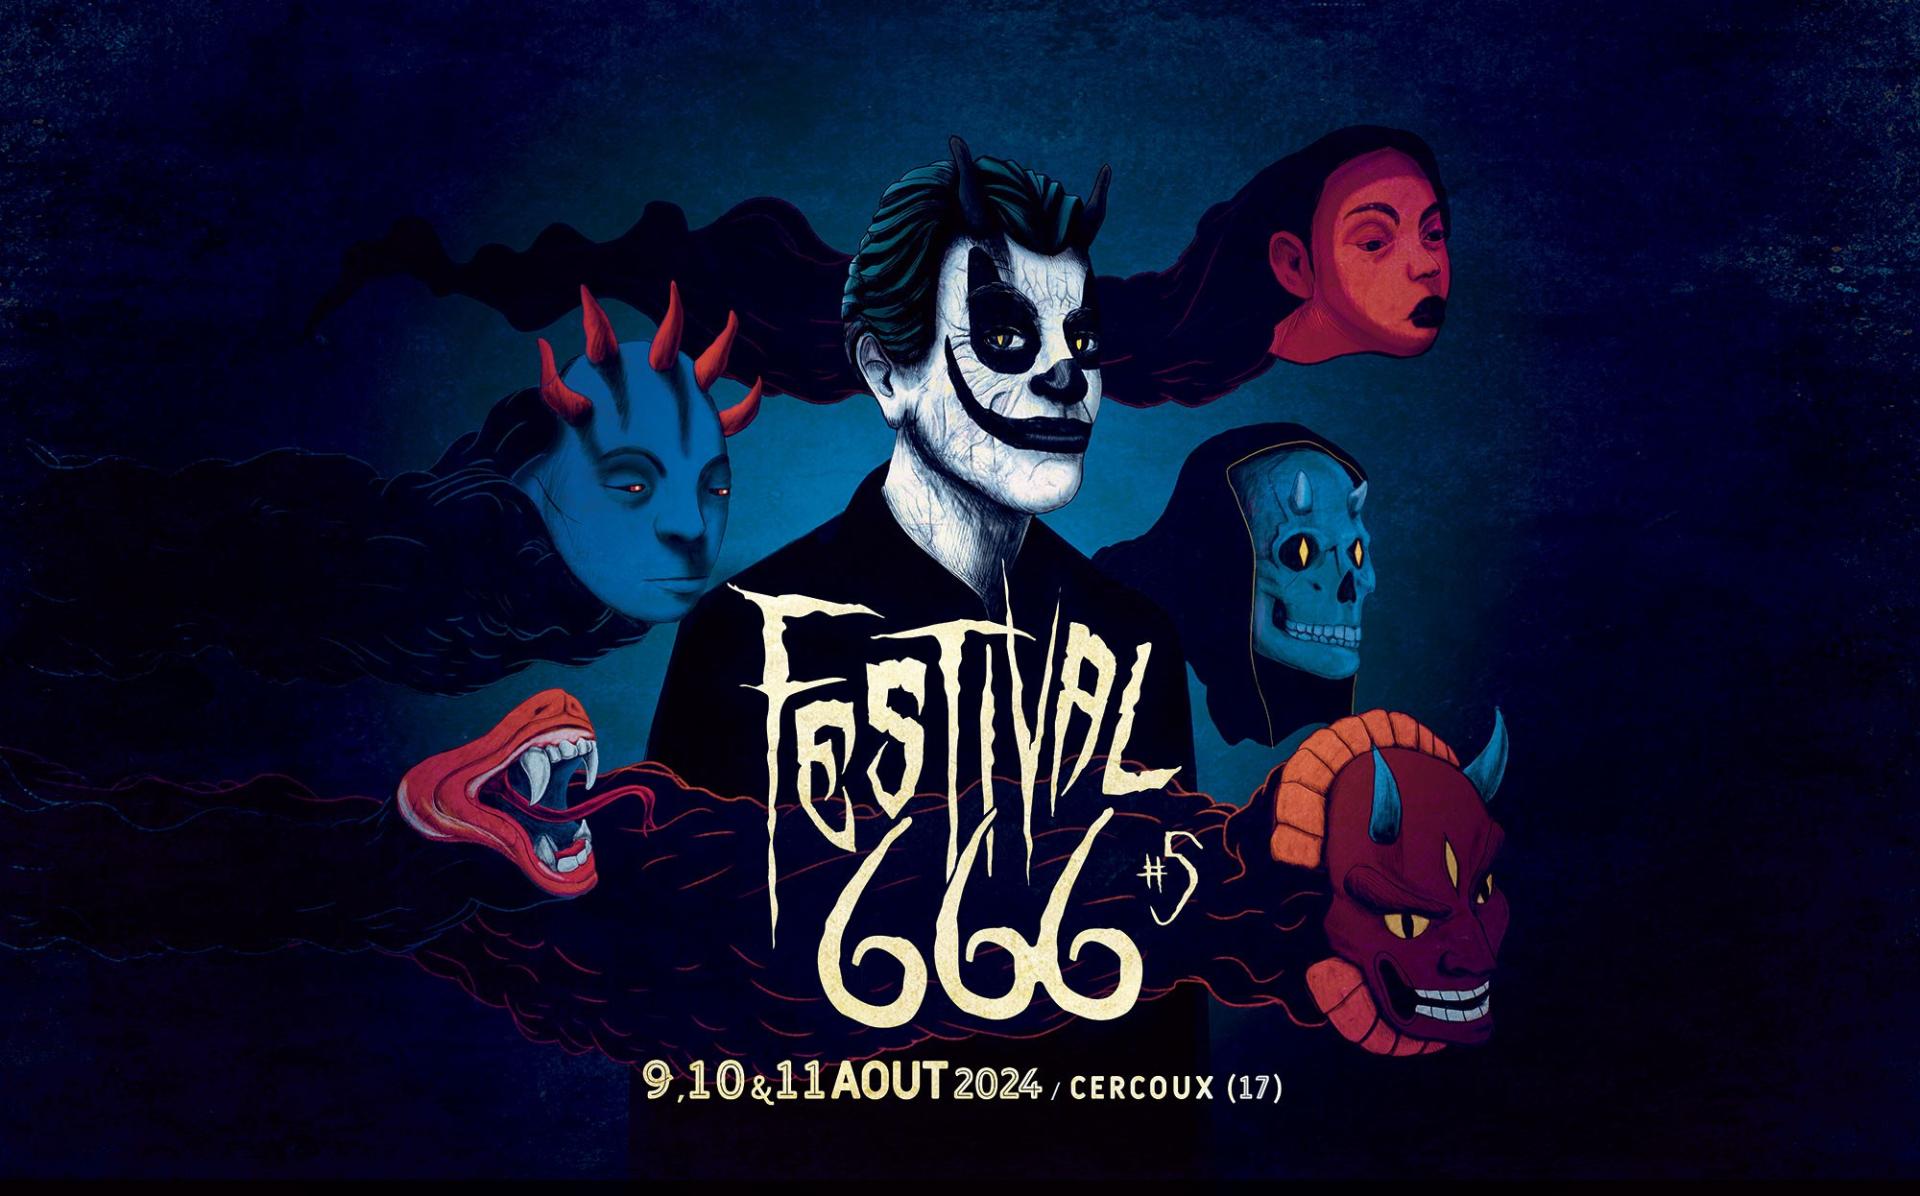 Festival 666 2024 ban